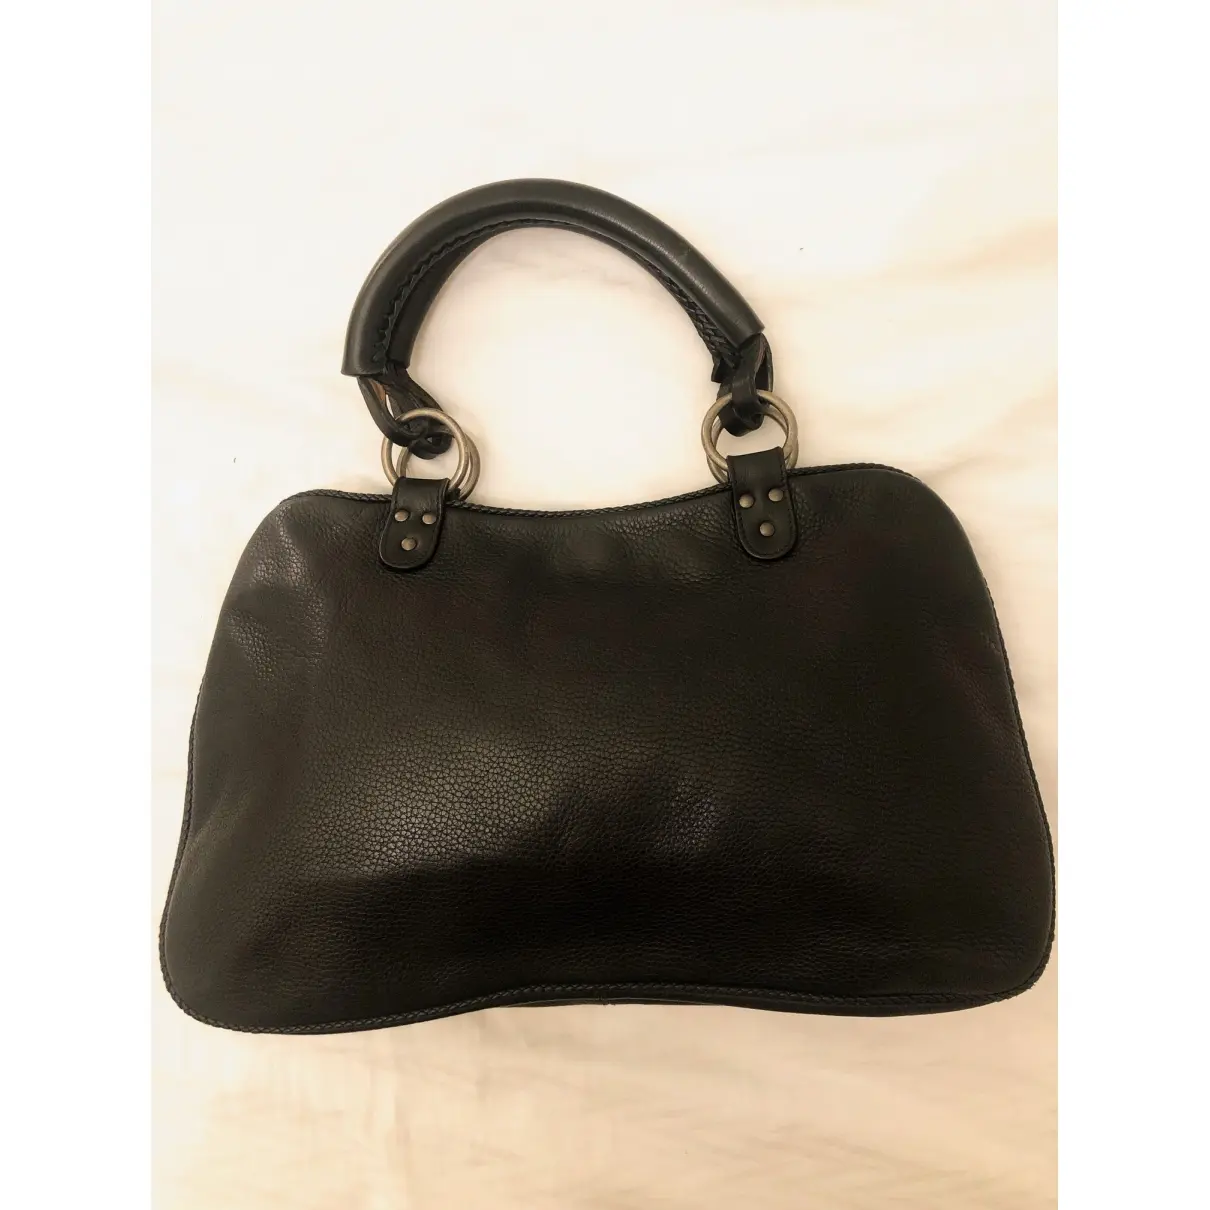 Dior Gaucho leather handbag for sale - Vintage